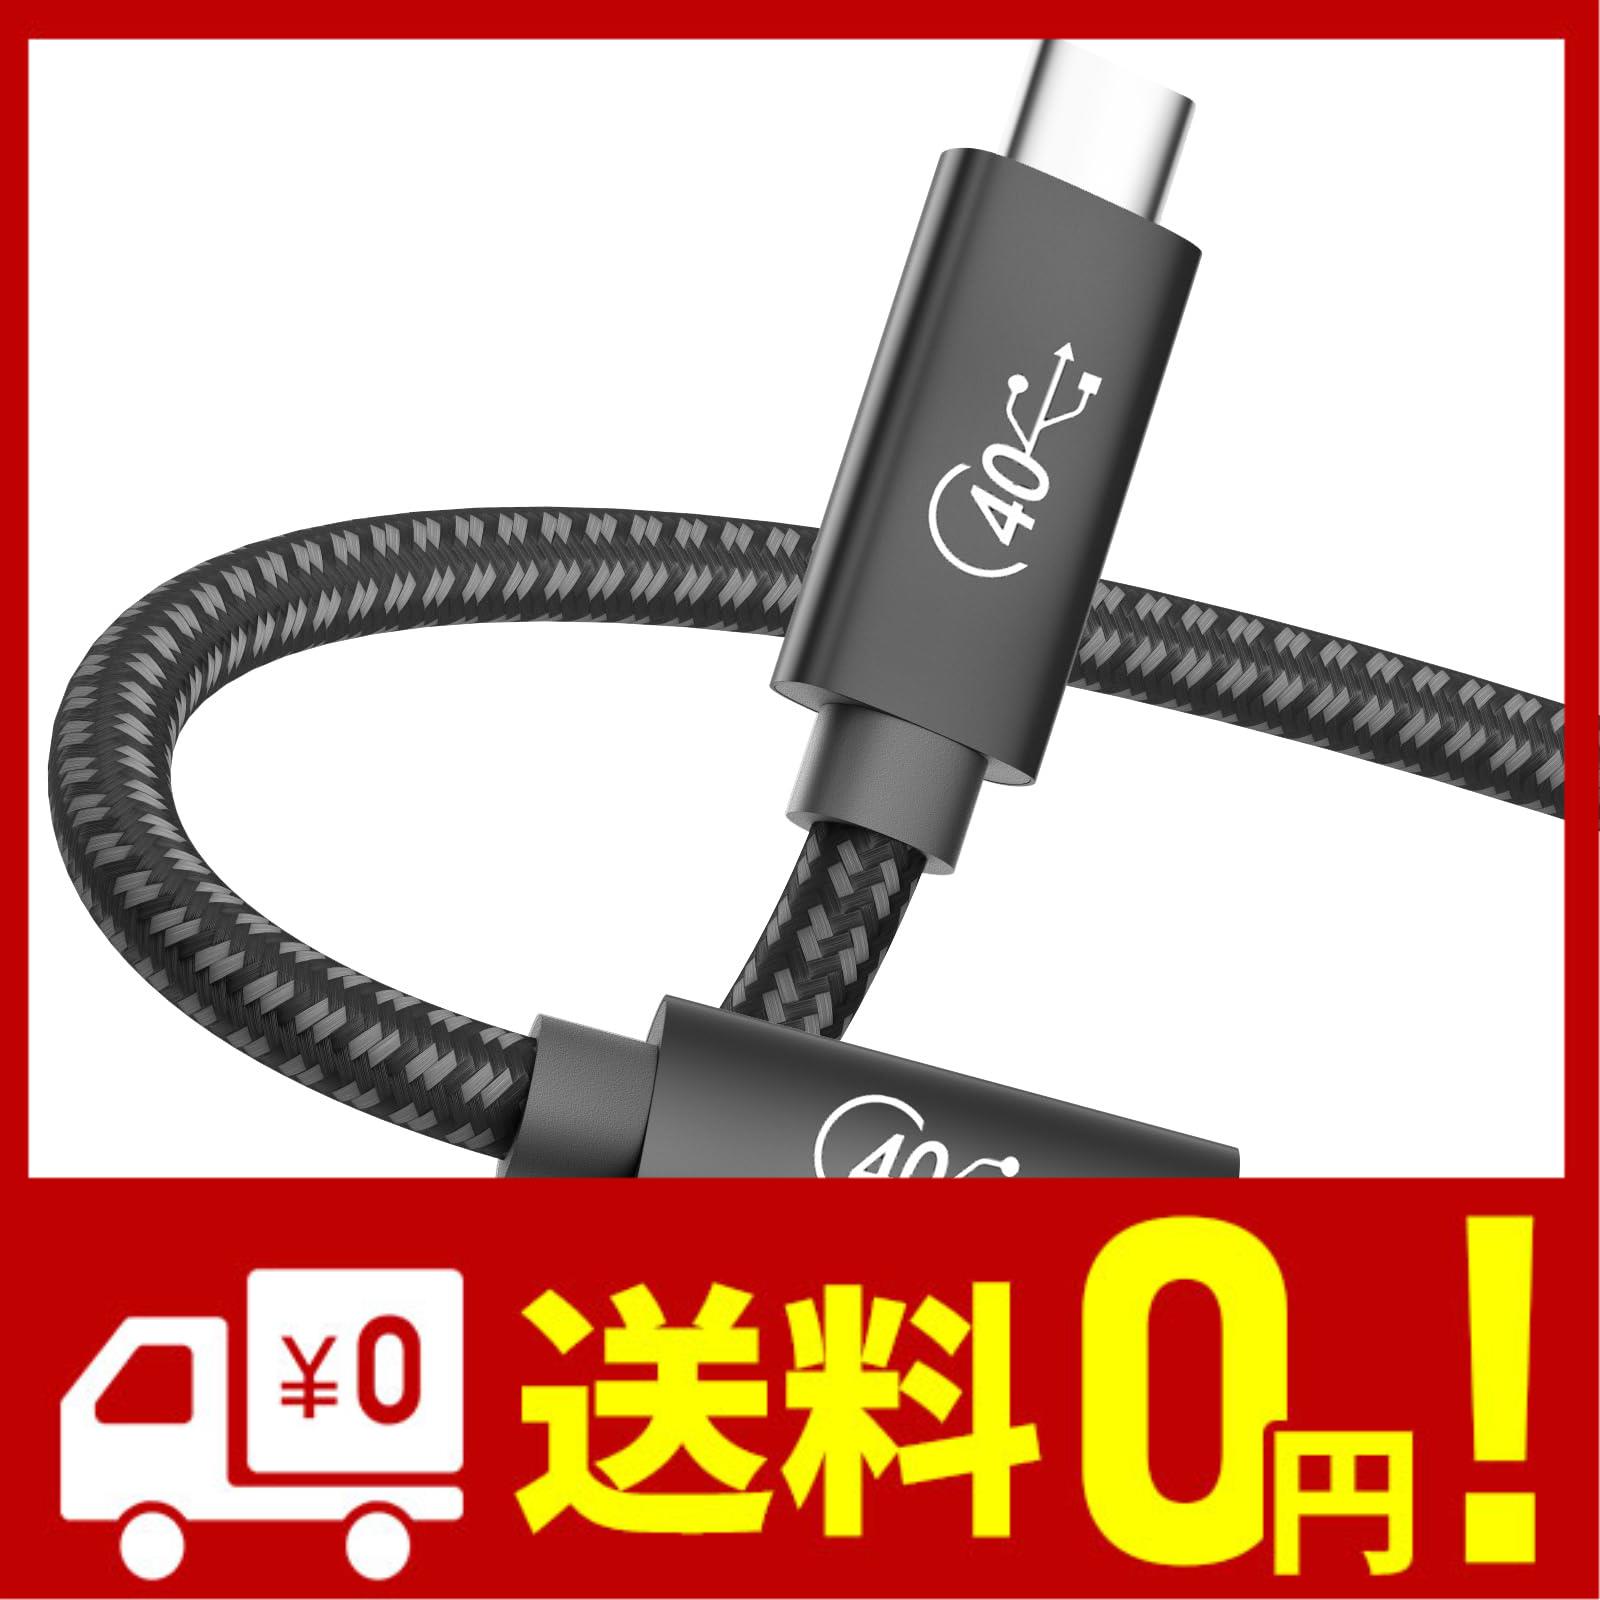 USB4 ケーブル thunderbolt 4 対応 Type C ケーブル 0.5m LpoieJun 40Gbps高速転送 100w急速充電 8K@60Hz 映像出力 Thunderbolt 3とUSB-